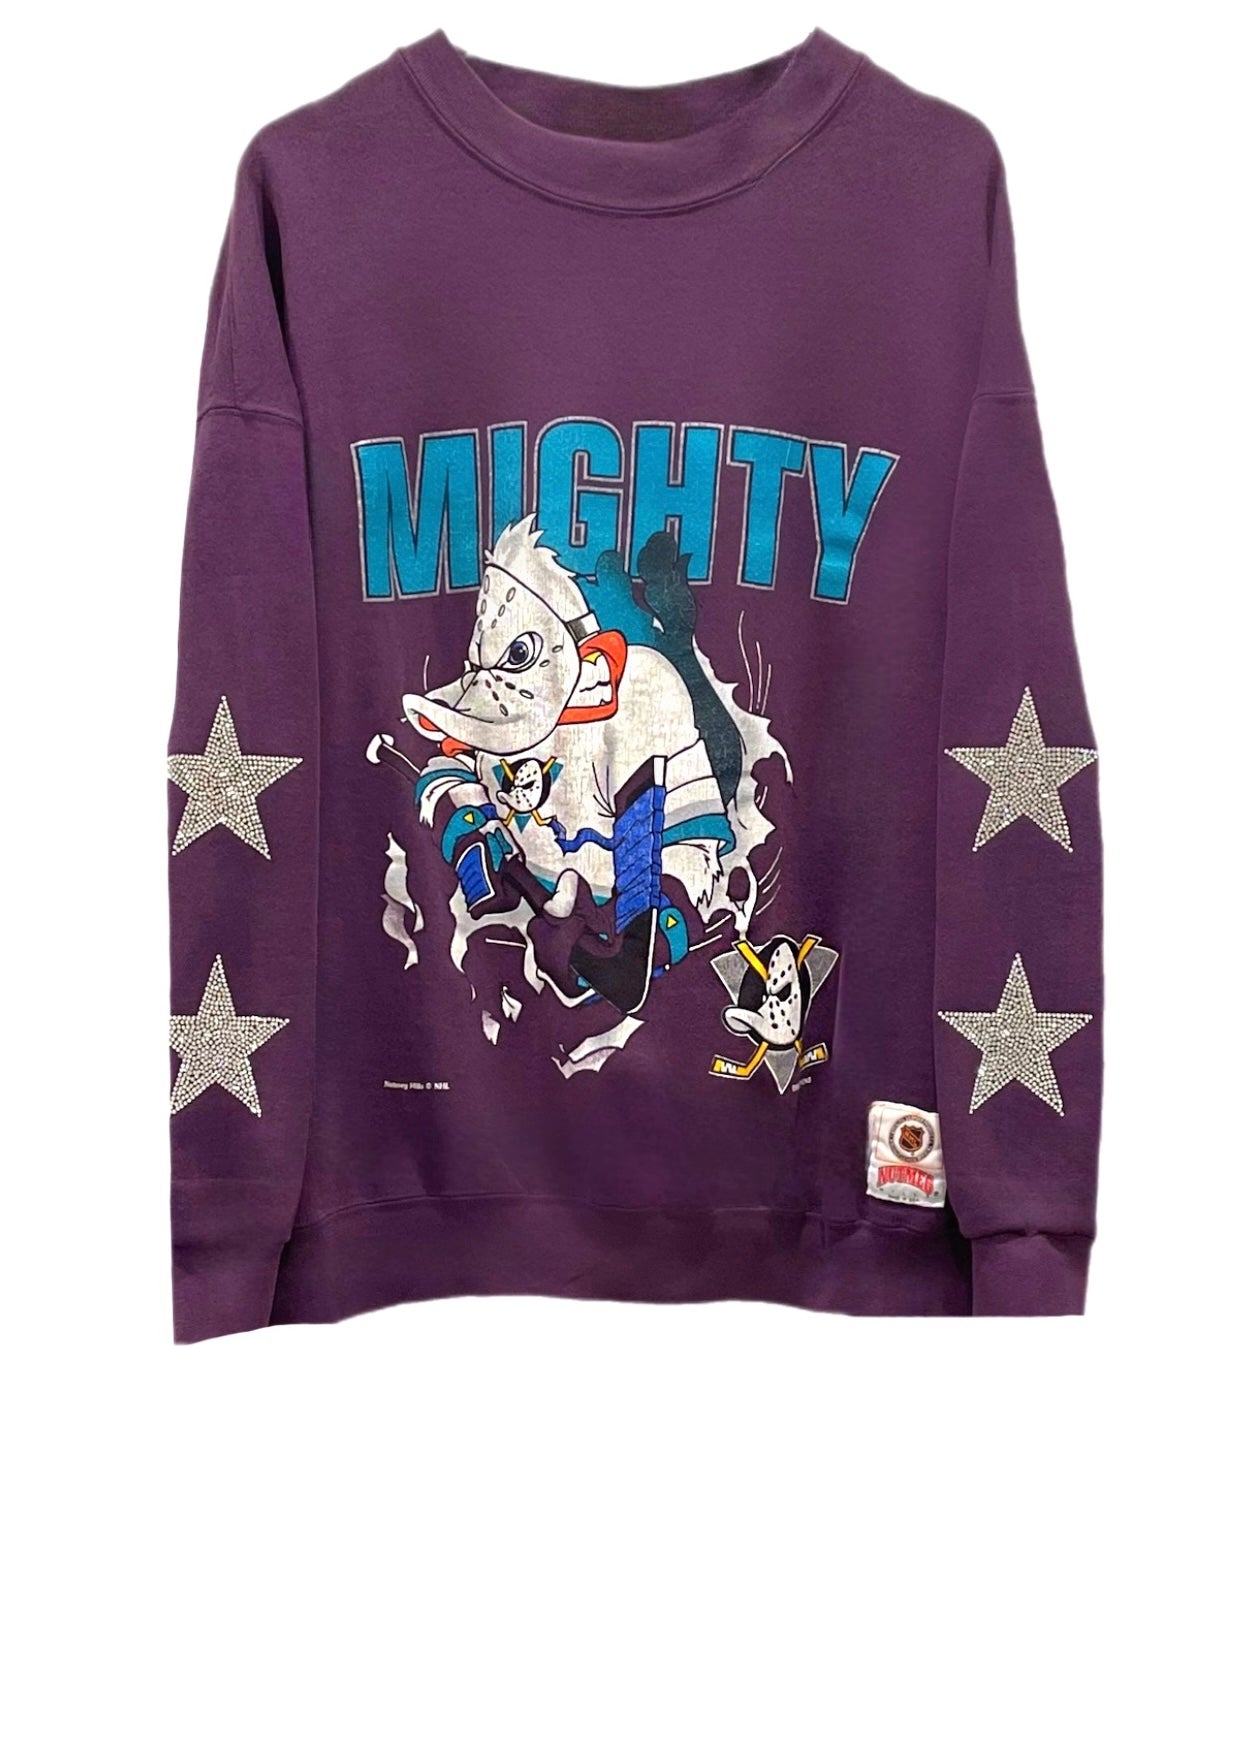 Anaheim Ducks, NHL One of a KIND Vintage “Mighty Ducks” Sweatshirt with  Crystal Star Design.